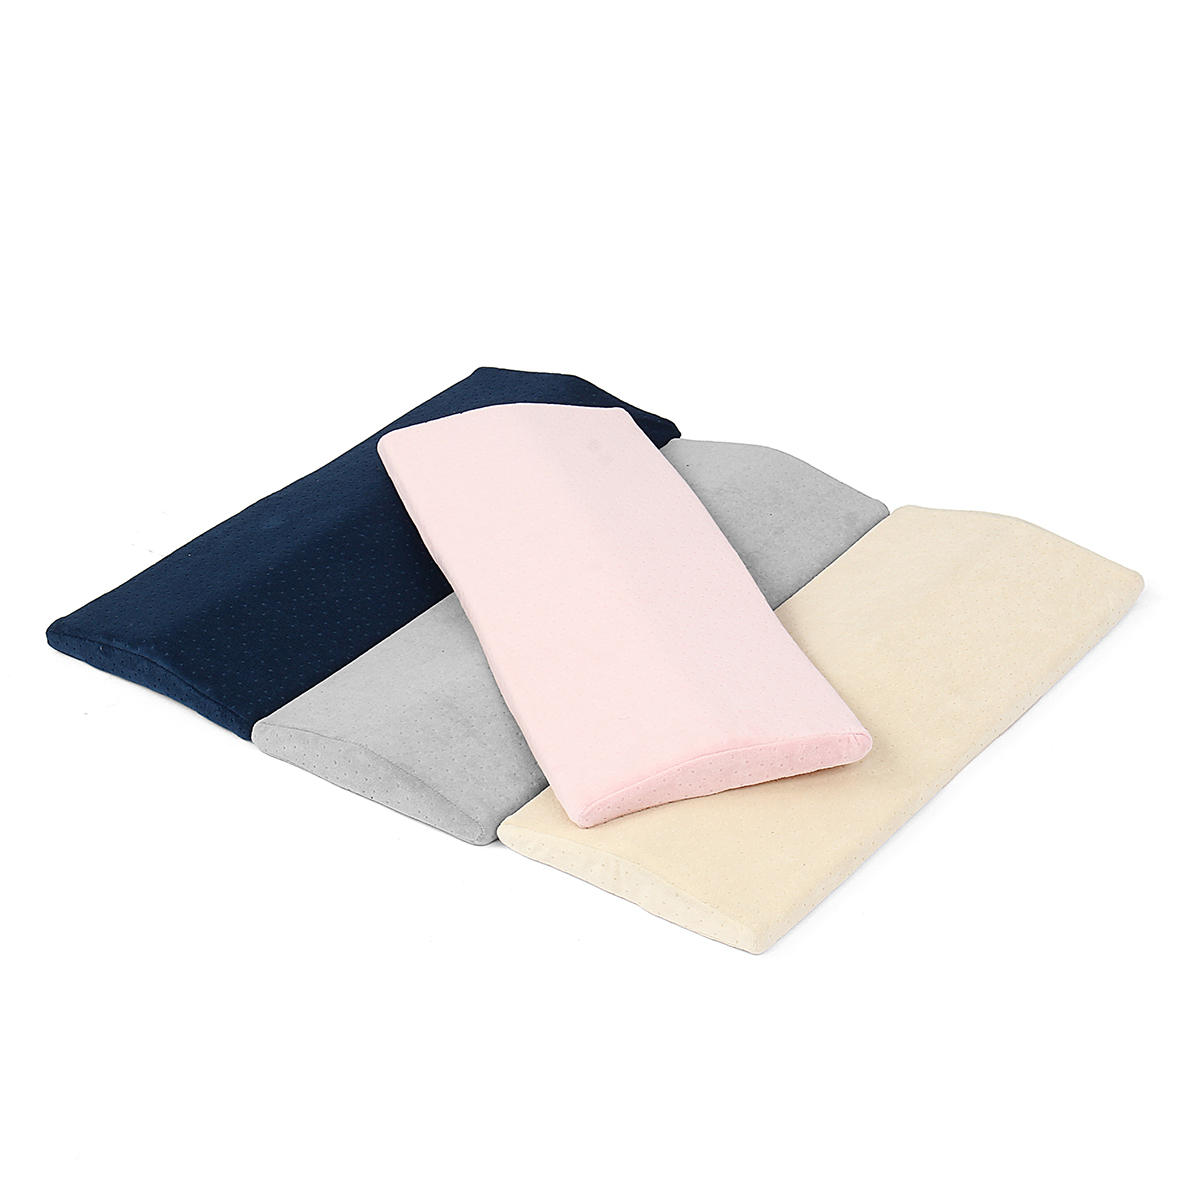 Lumbar Support Wedge Memory Pillow Bed Sleeping Cushion